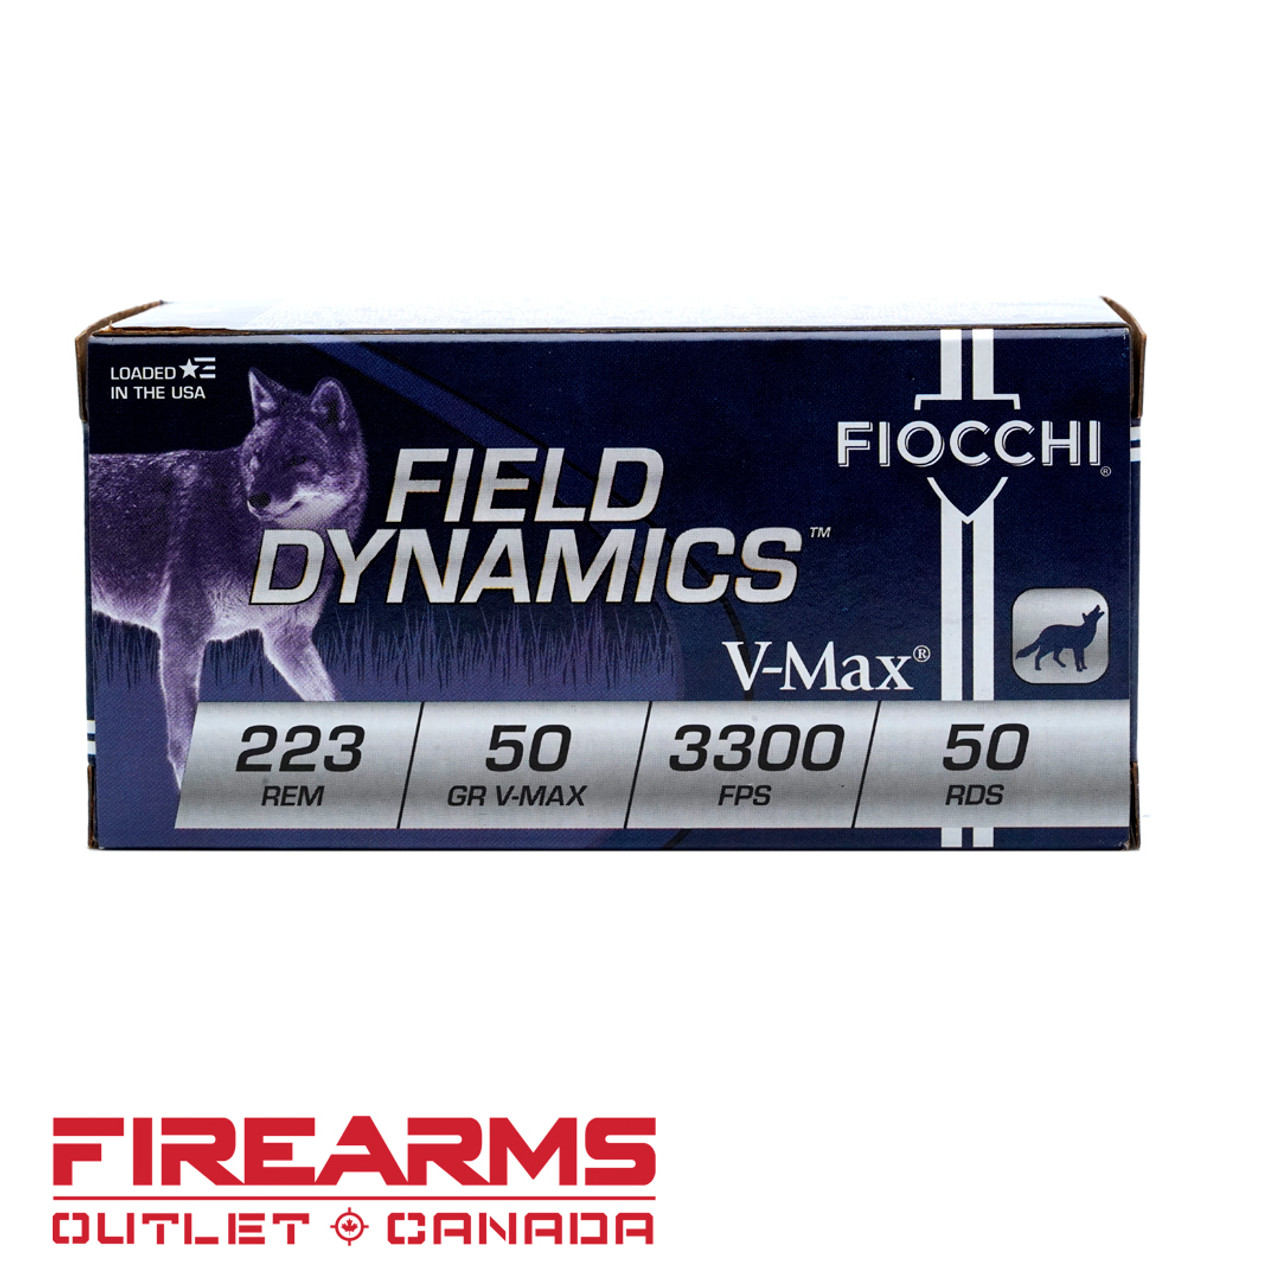 Fiocchi Field Dynamics Ammunition - .223 Rem., 50gr, V-MAX, Box of 50 [223HVA50]